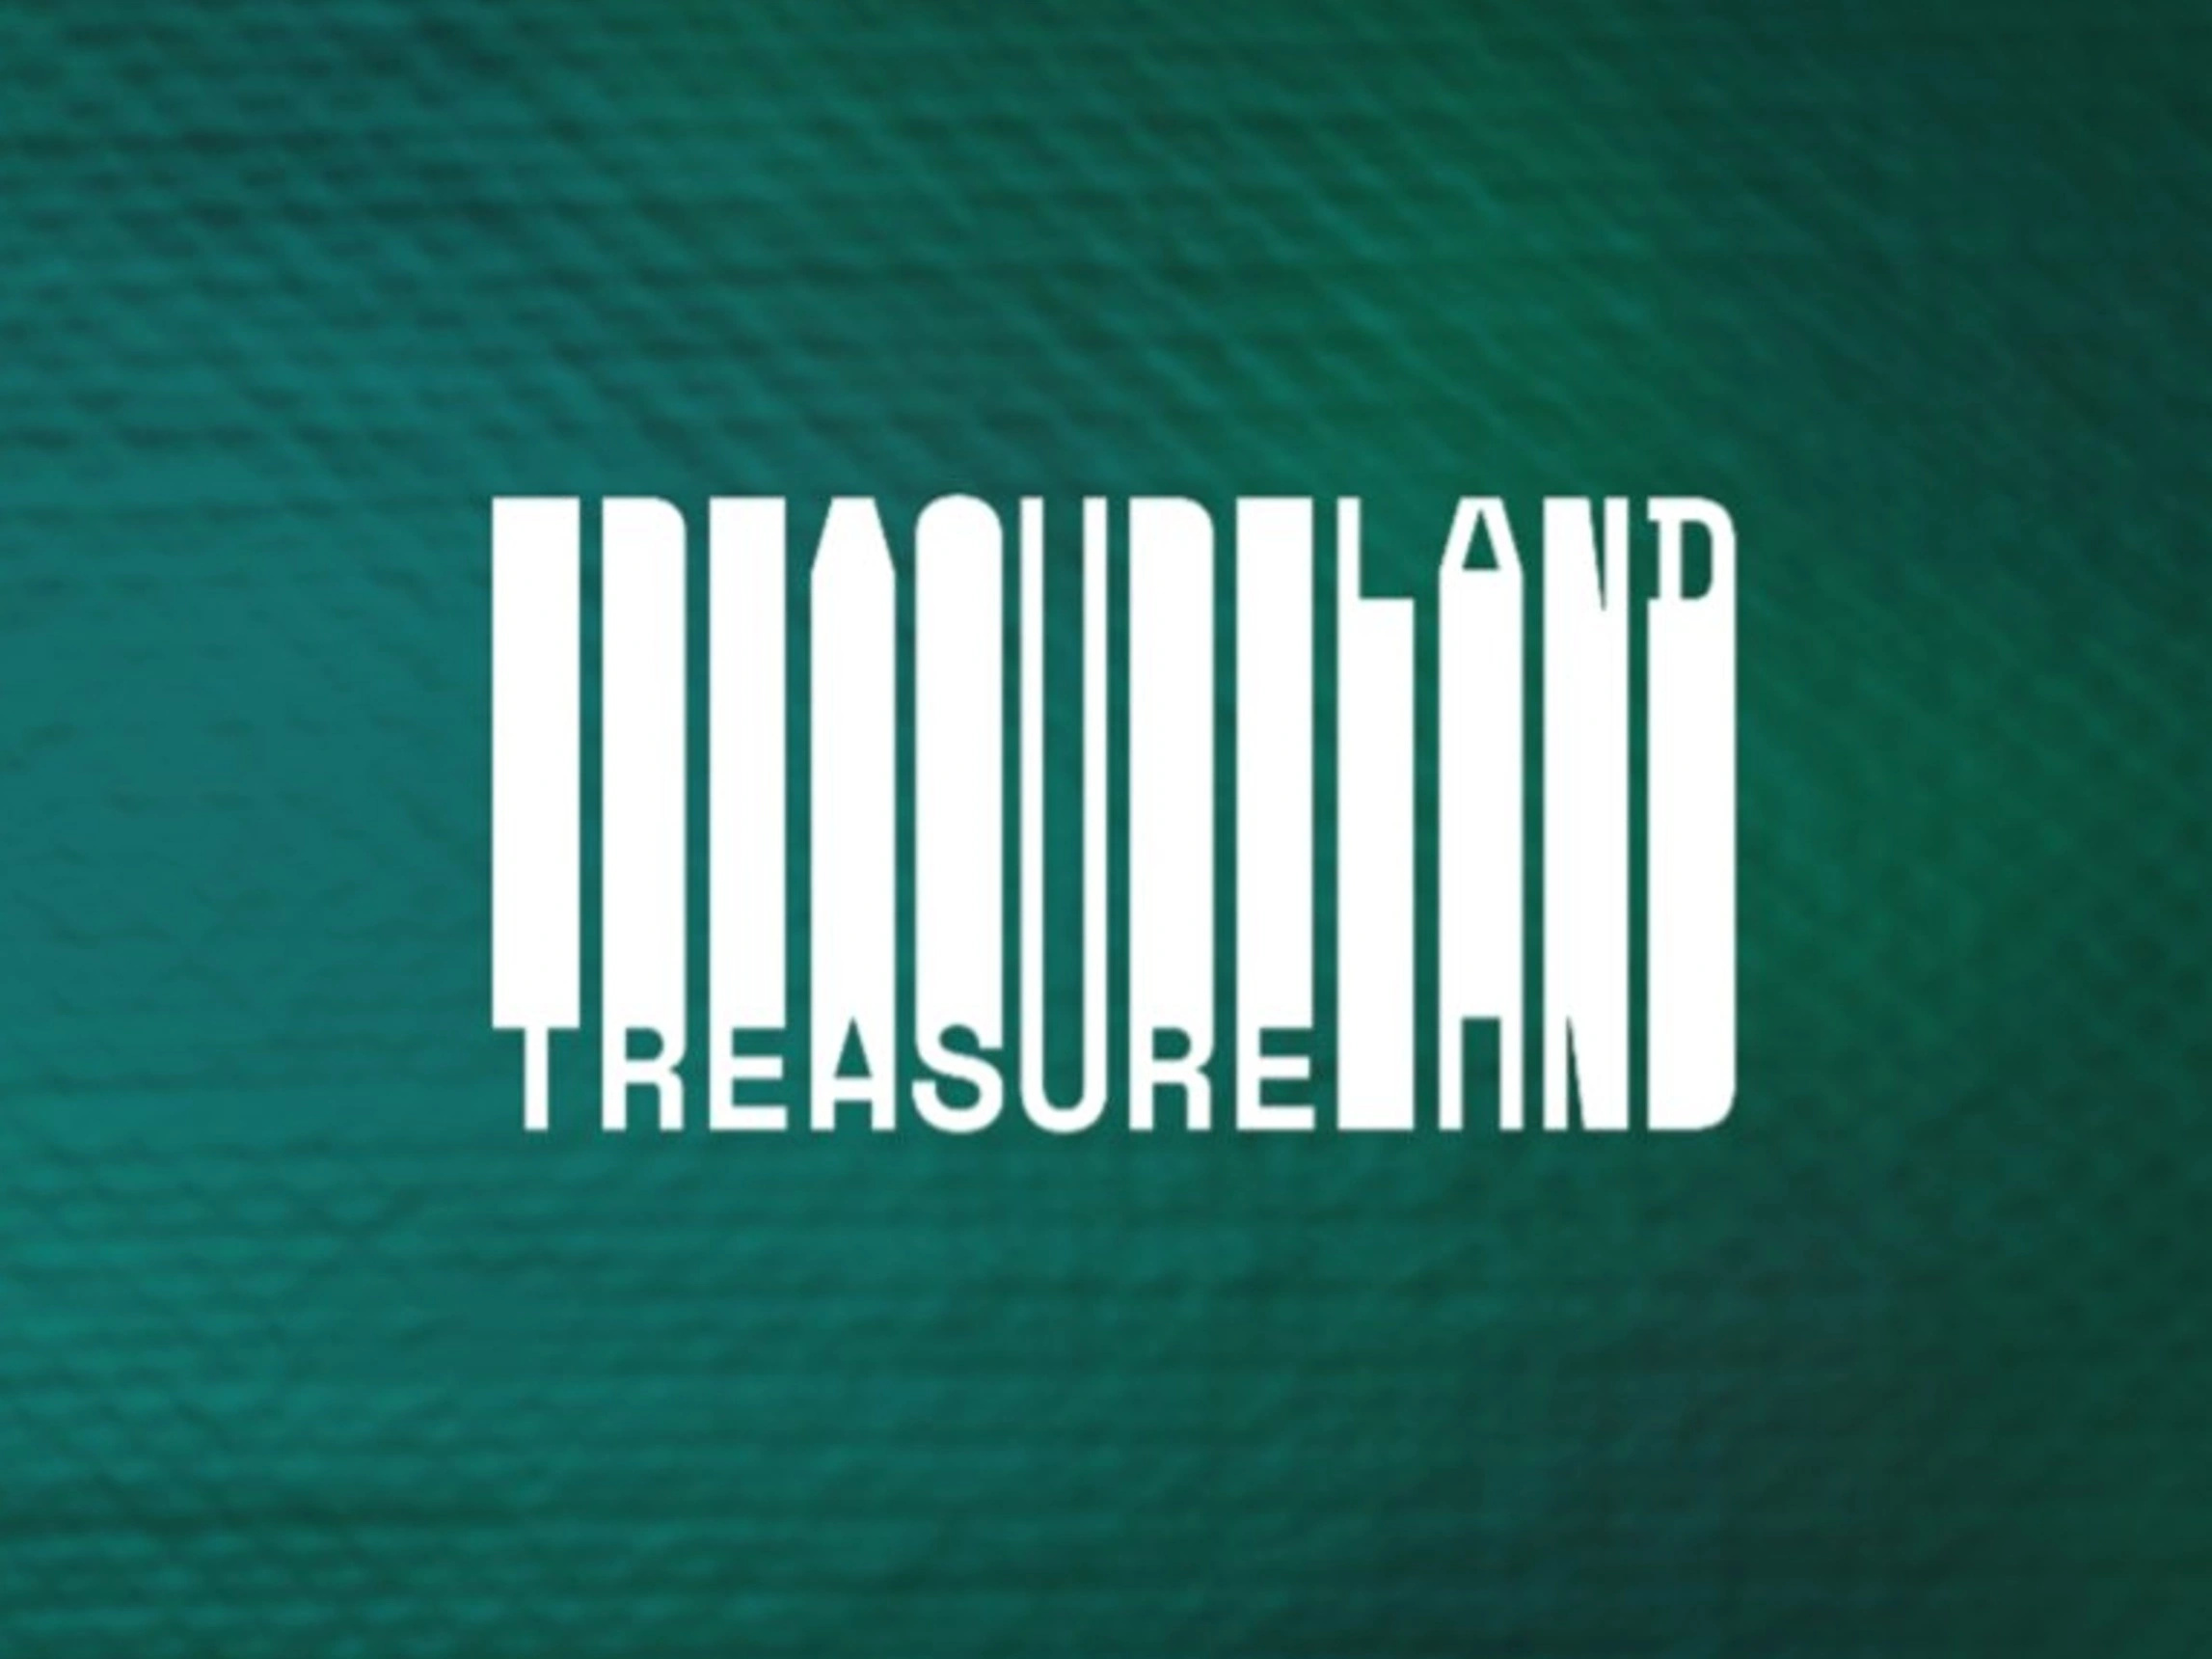 Treasureland